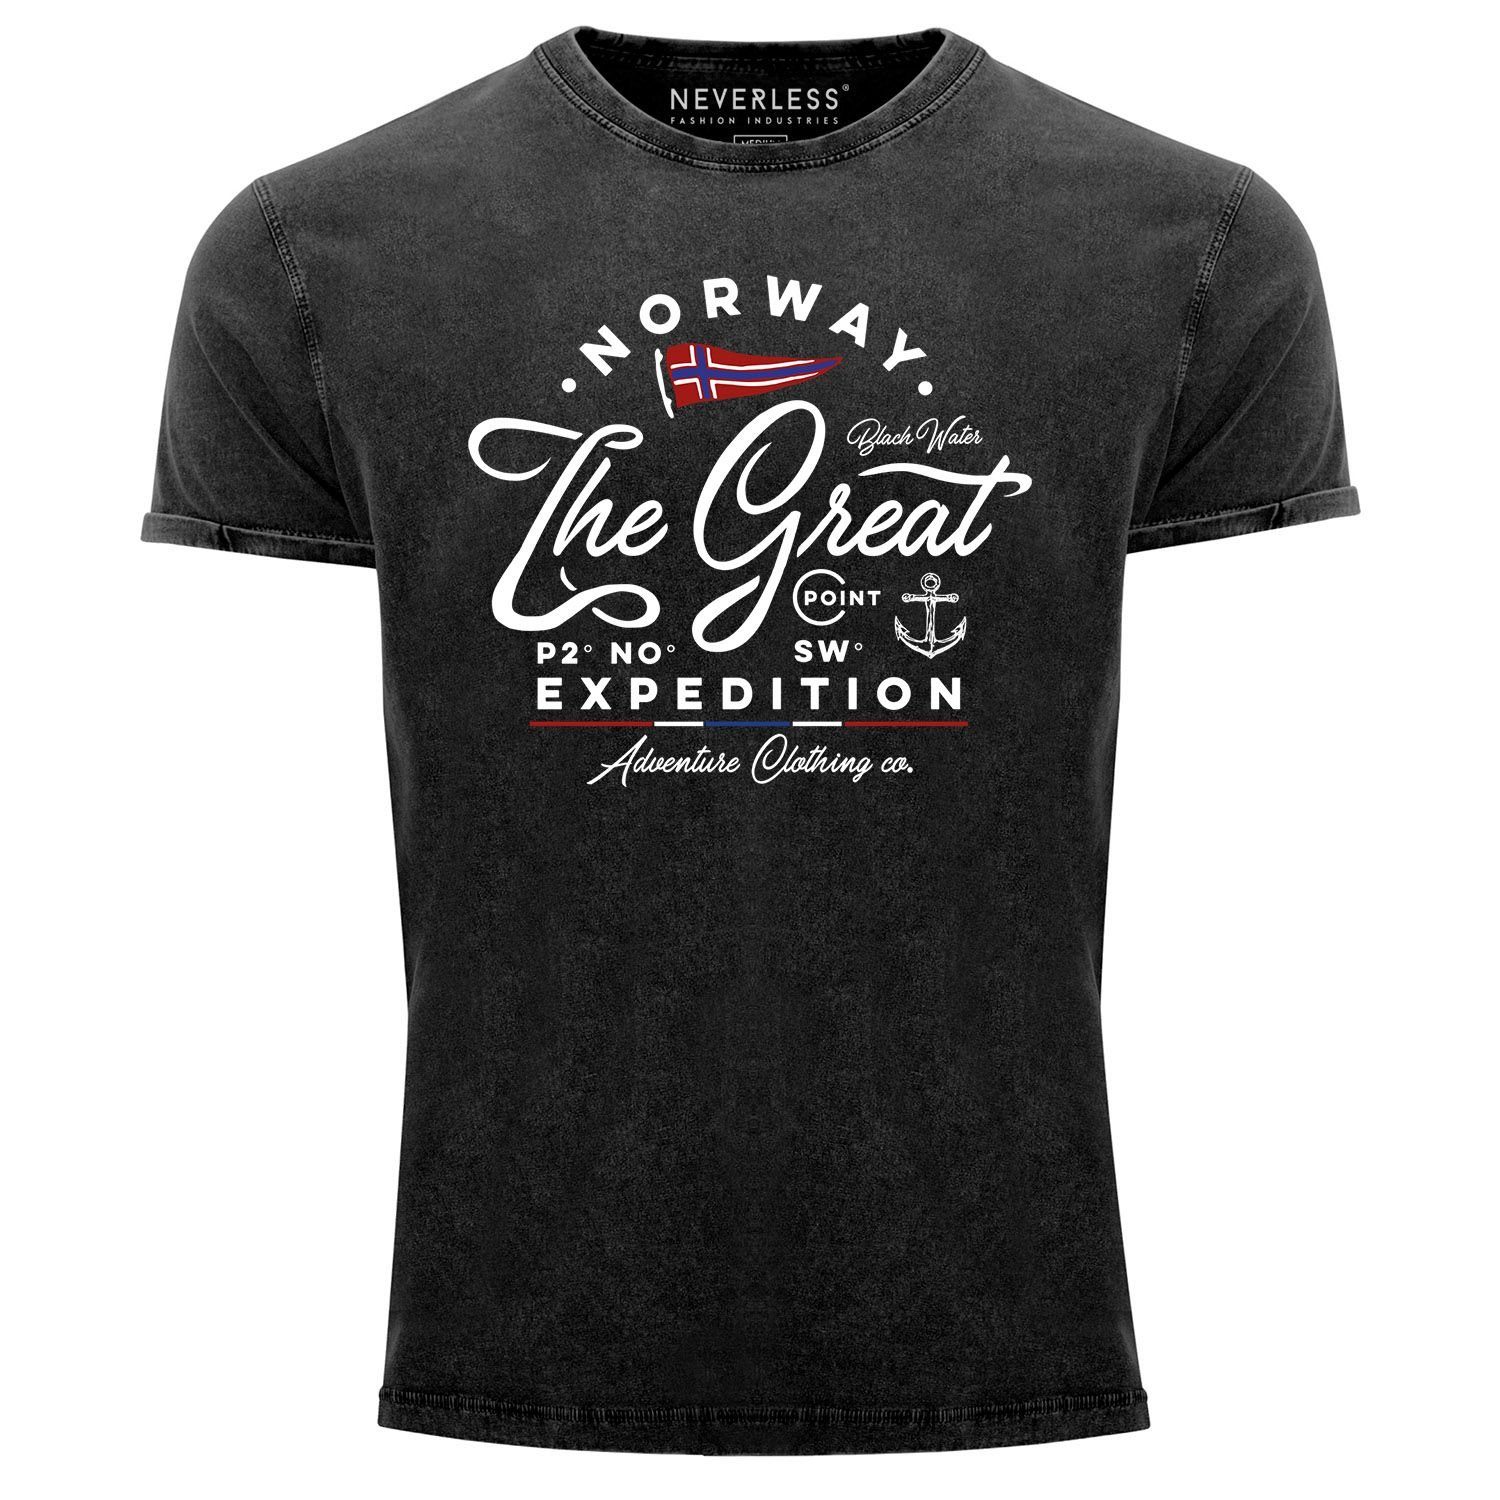 Neverless Print-Shirt Herren Vintage Shirt Norwegen The Great Expedition Outdoor Adventure Printshirt T-Shirt Aufdruck Used Look Neverless® mit Print schwarz